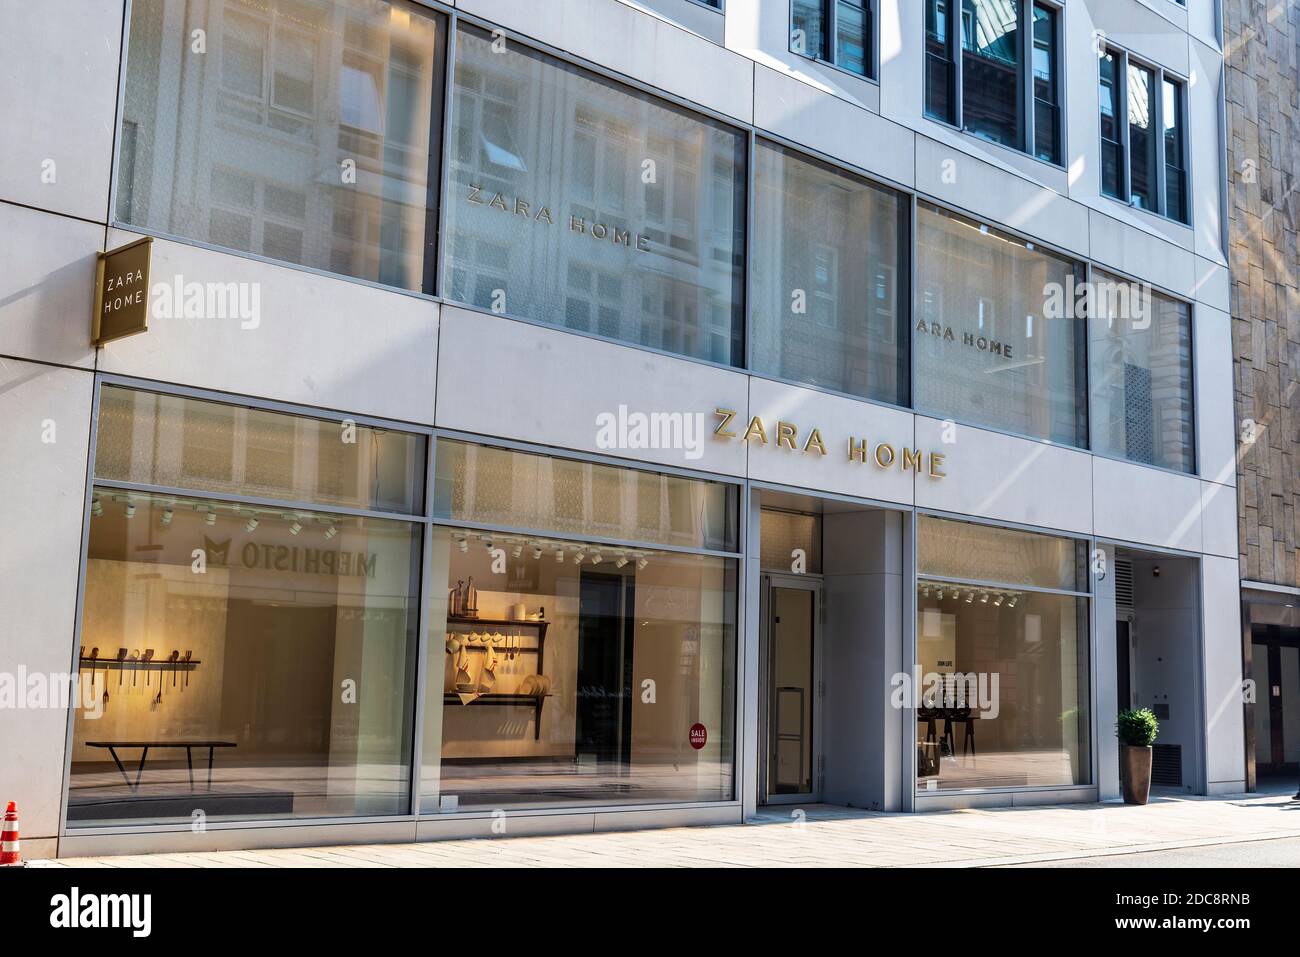 Zara shop window display hi-res stock photography and images - Alamy